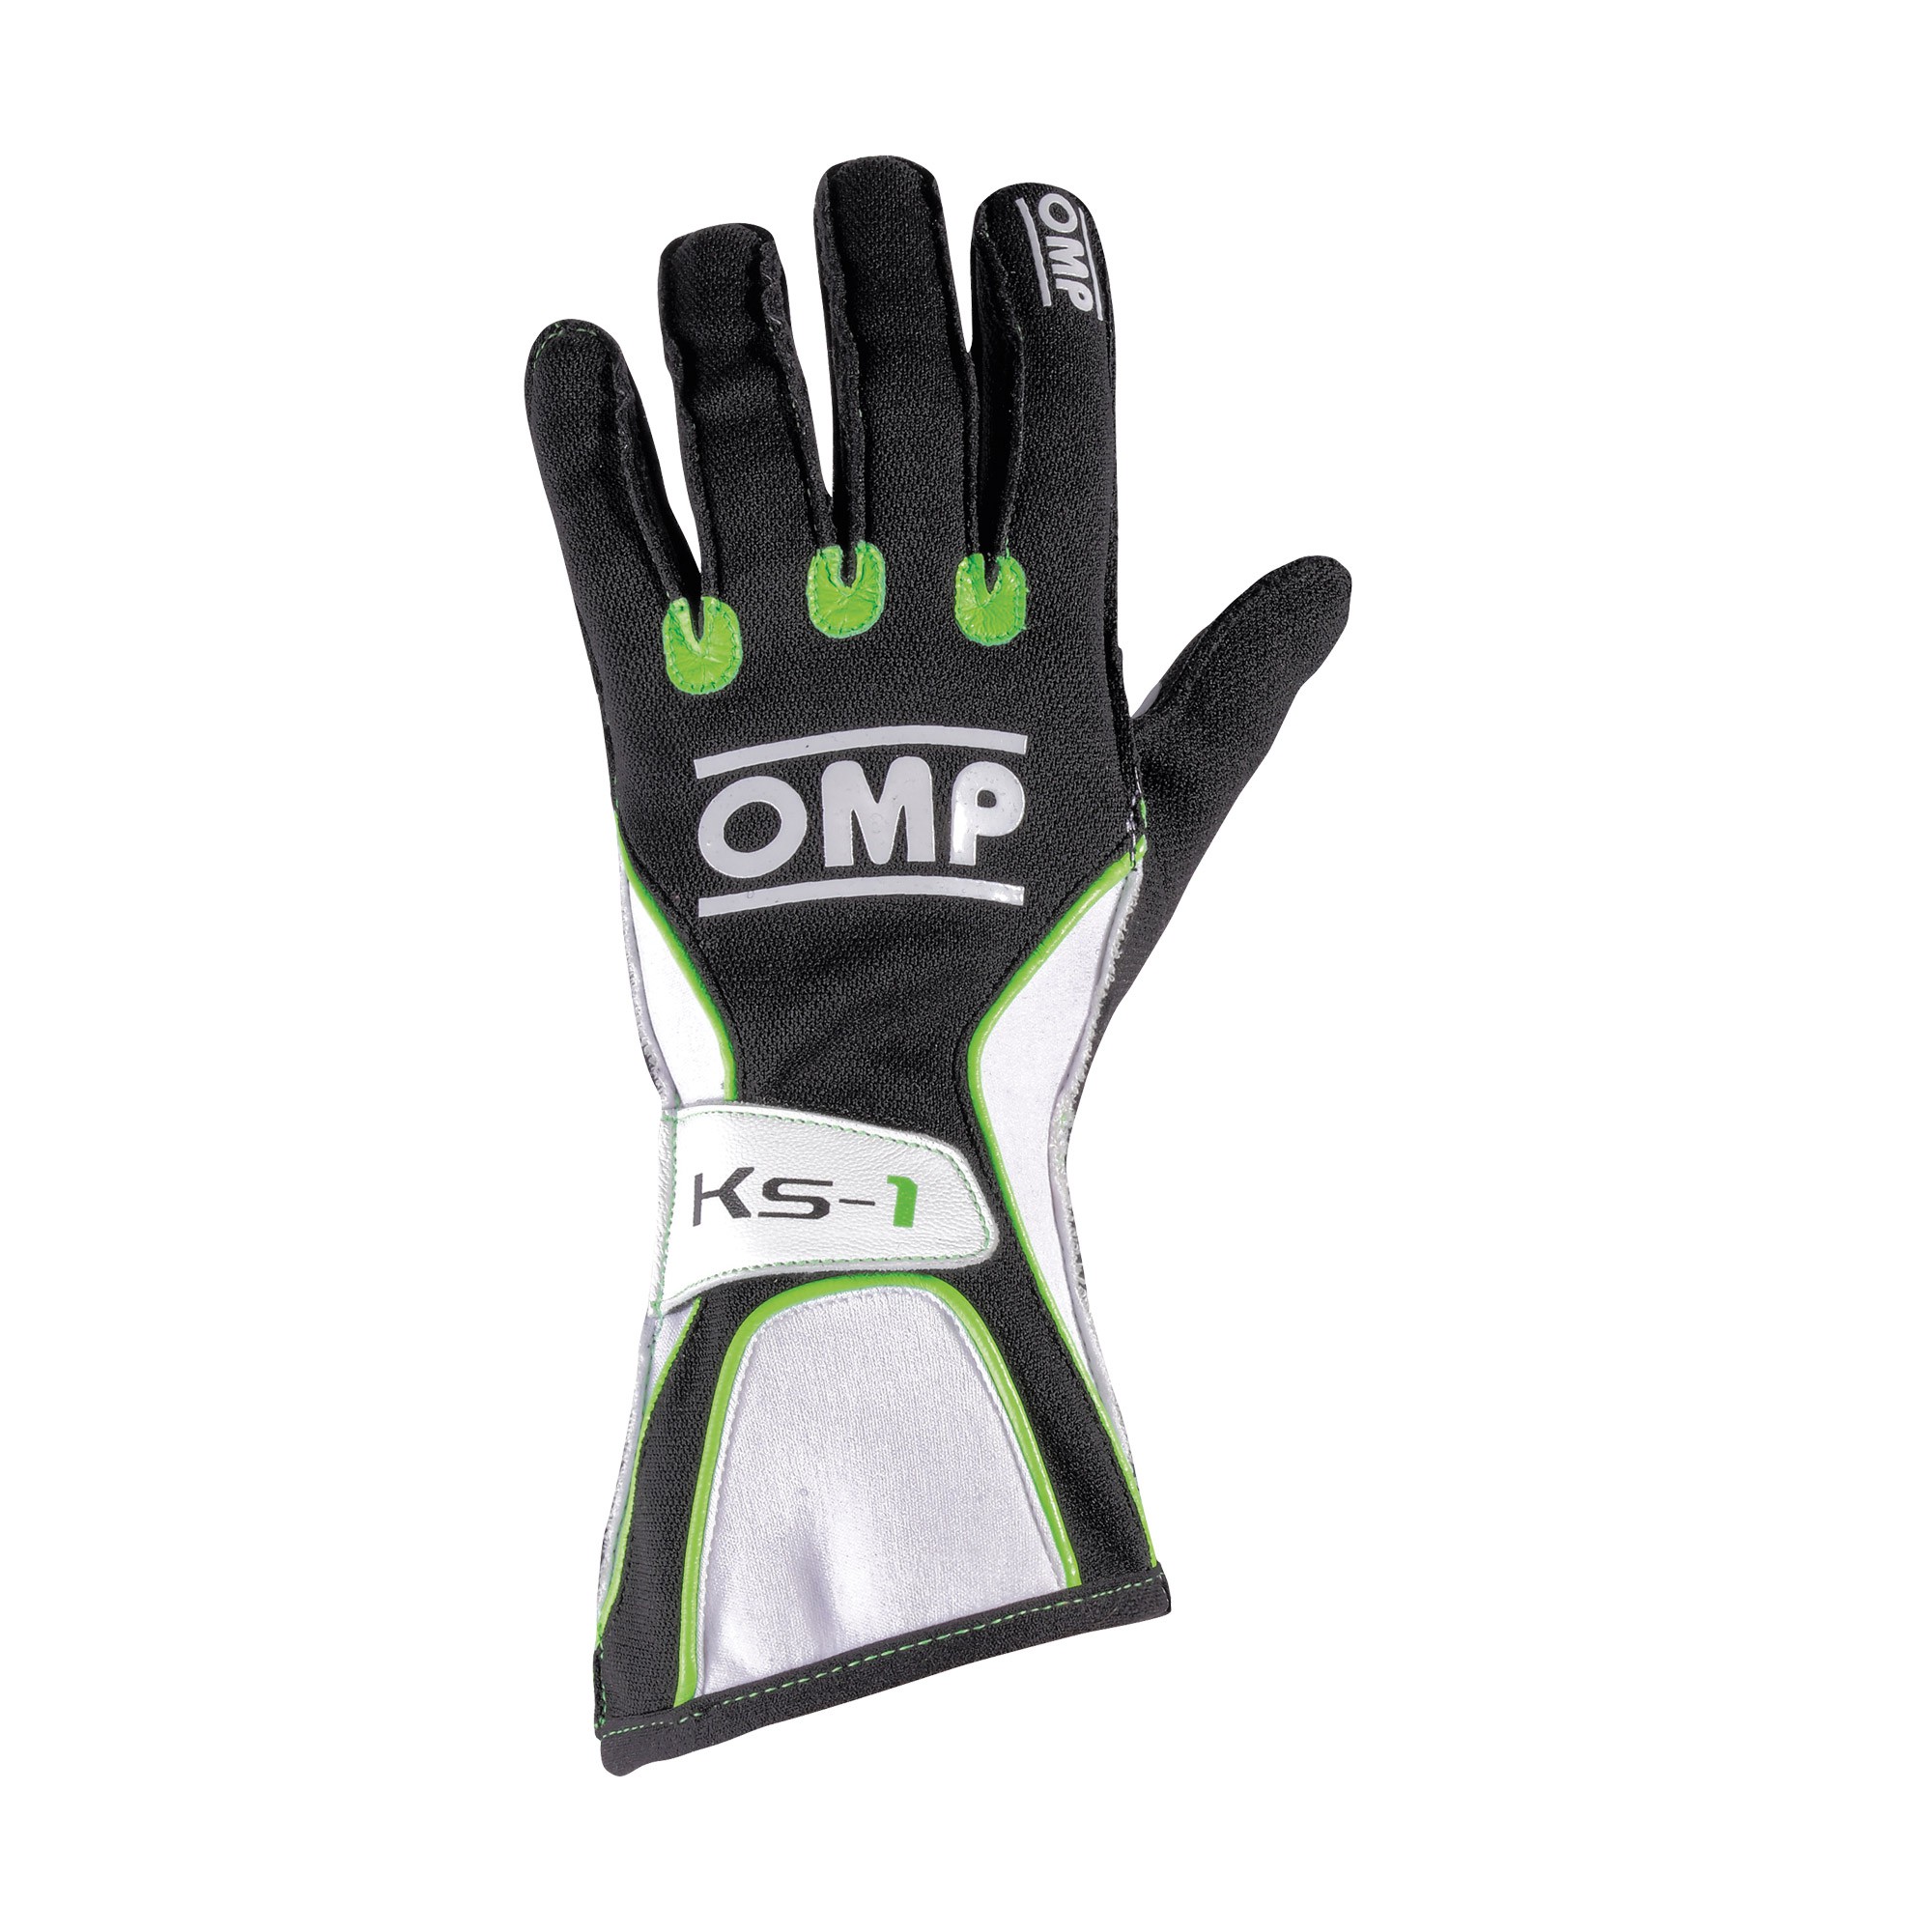 XL schwarz-grün glove OMP KS-1 Handschuhe Kart Gr 